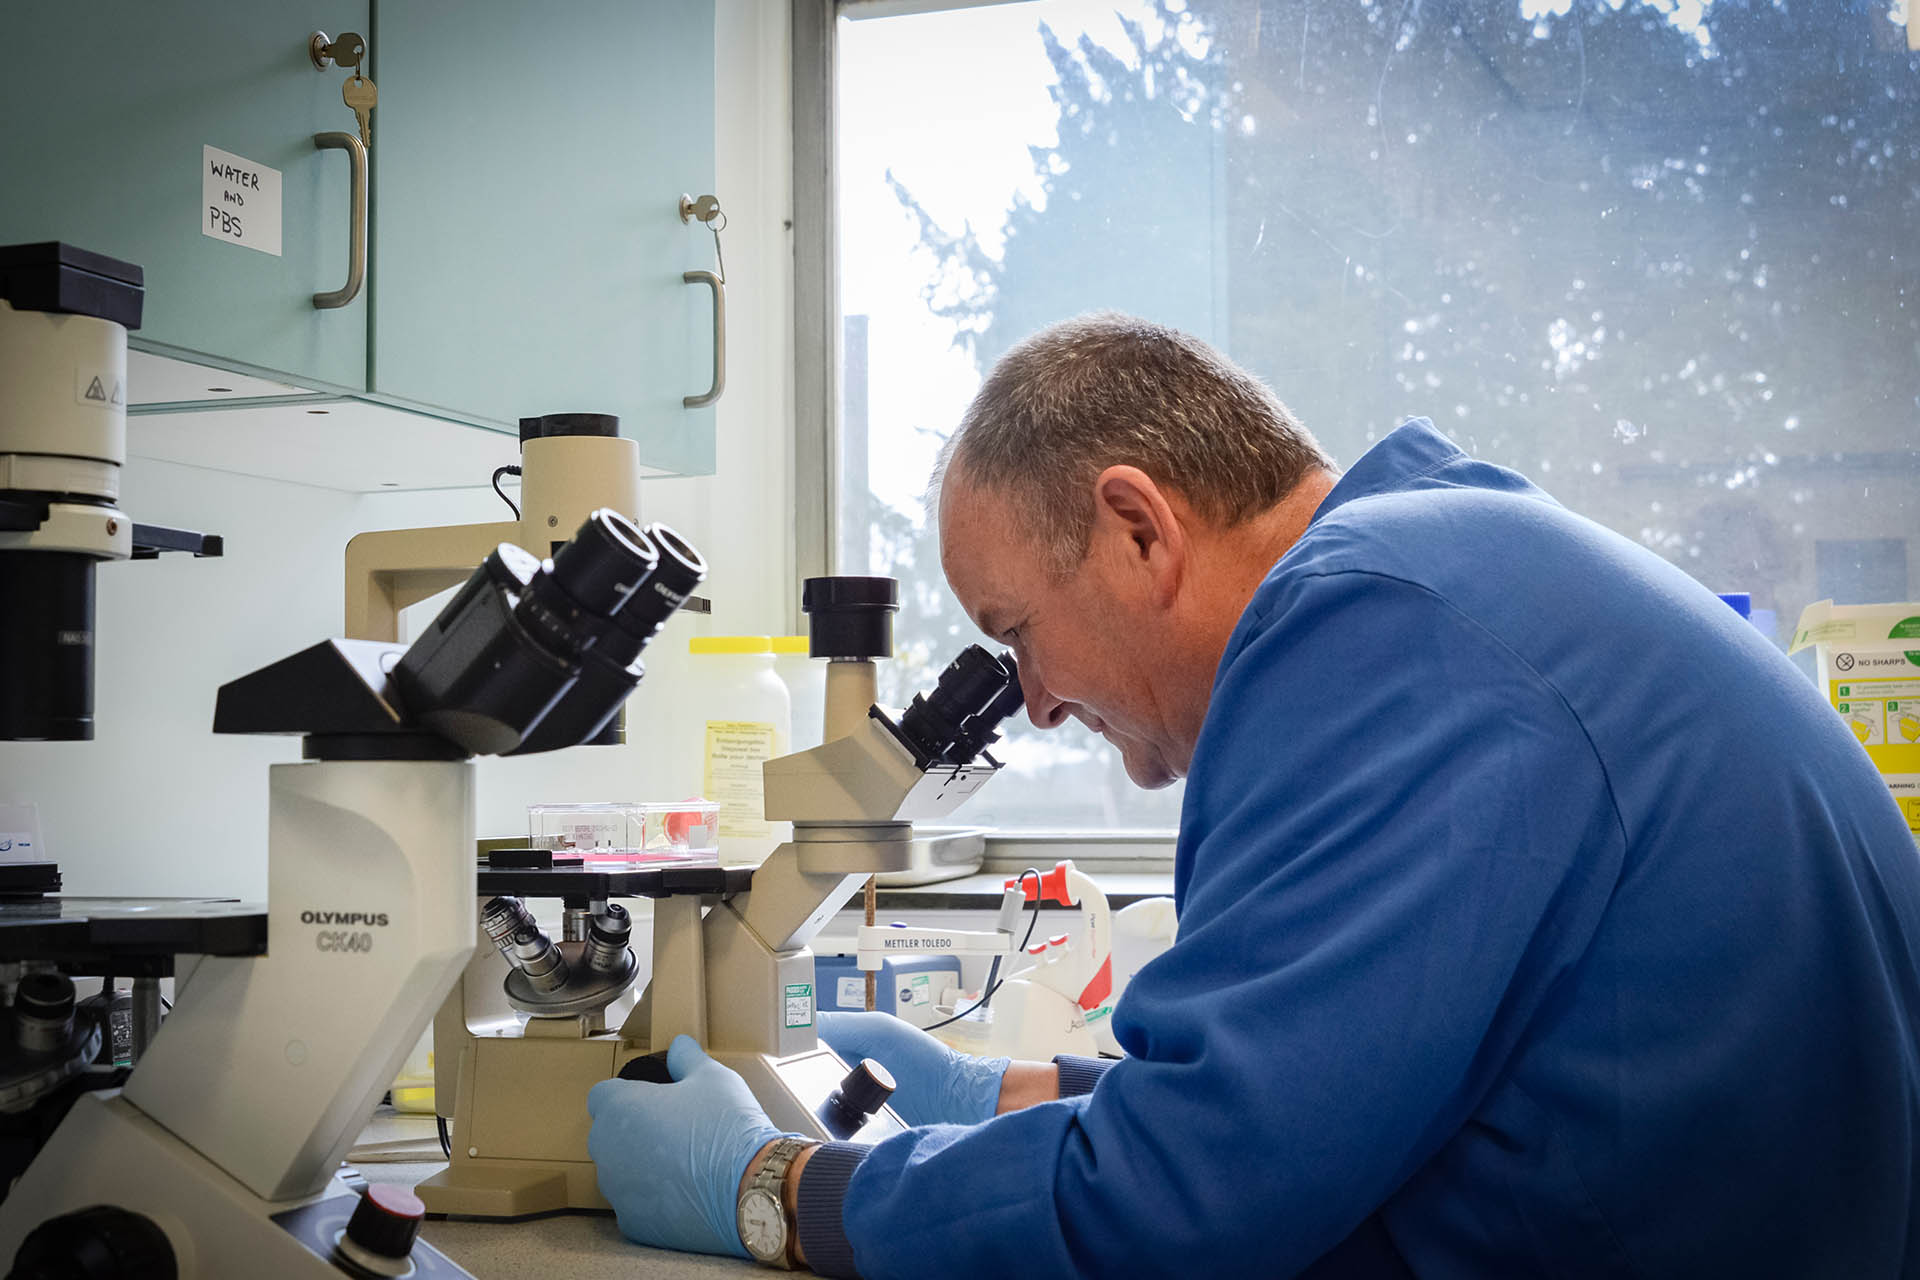 Male scientist using a microscope in a lab